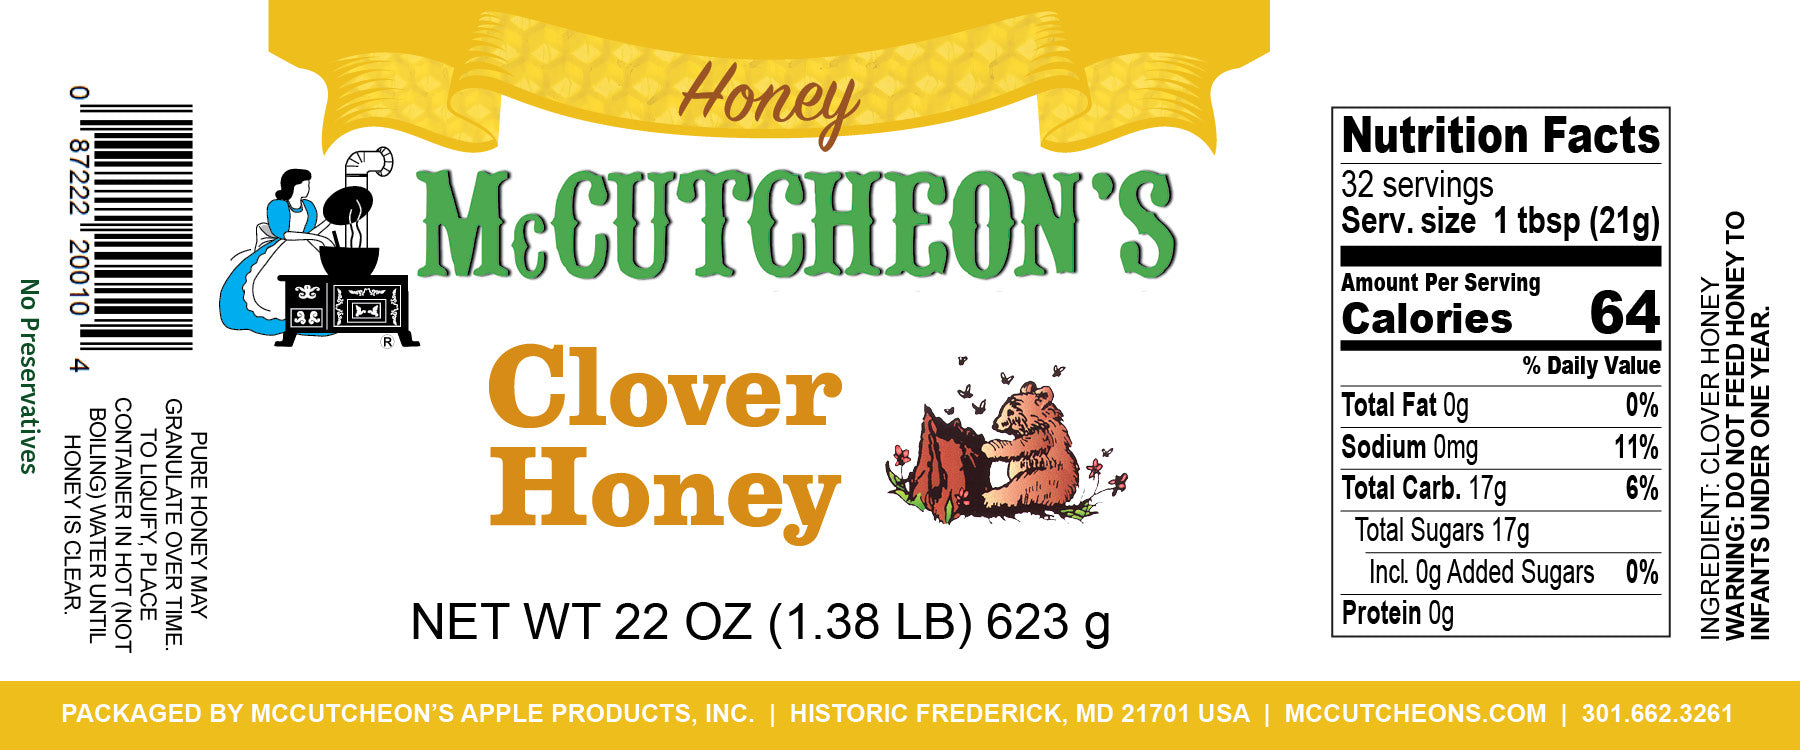 nutrition label for jar of McCutcheon's clover honey